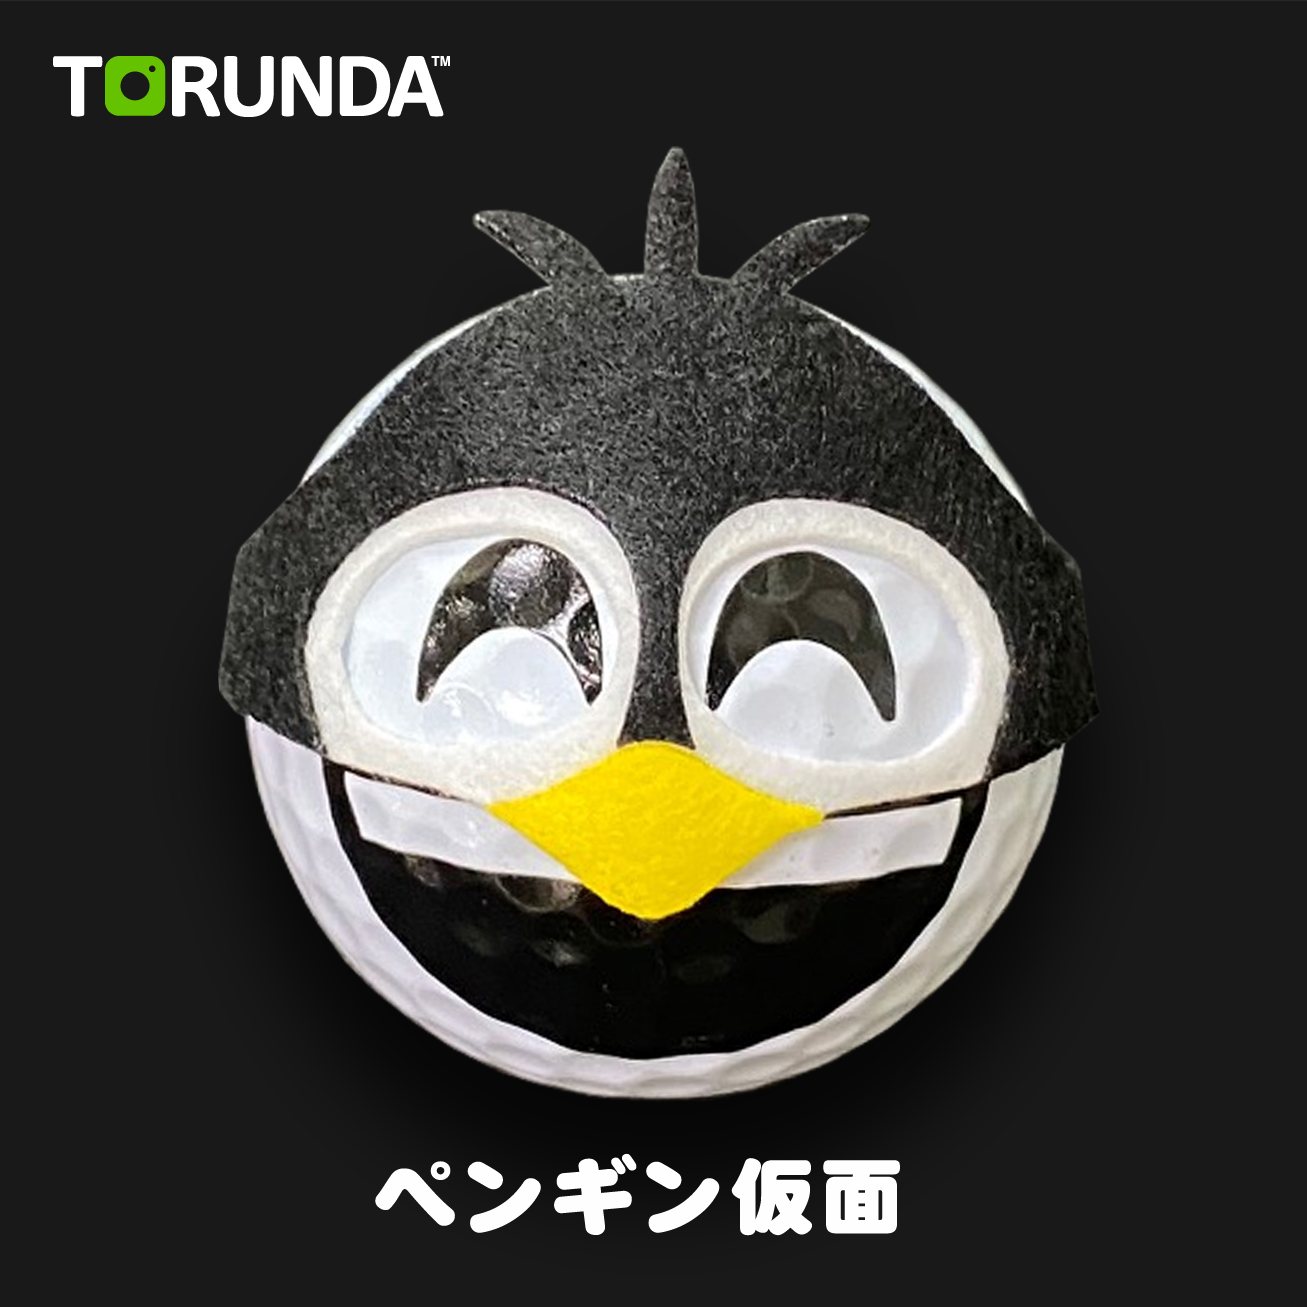 TORUNDA 撮るんだ かわいい 可愛い ゴルフボール用 ペンギン仮面